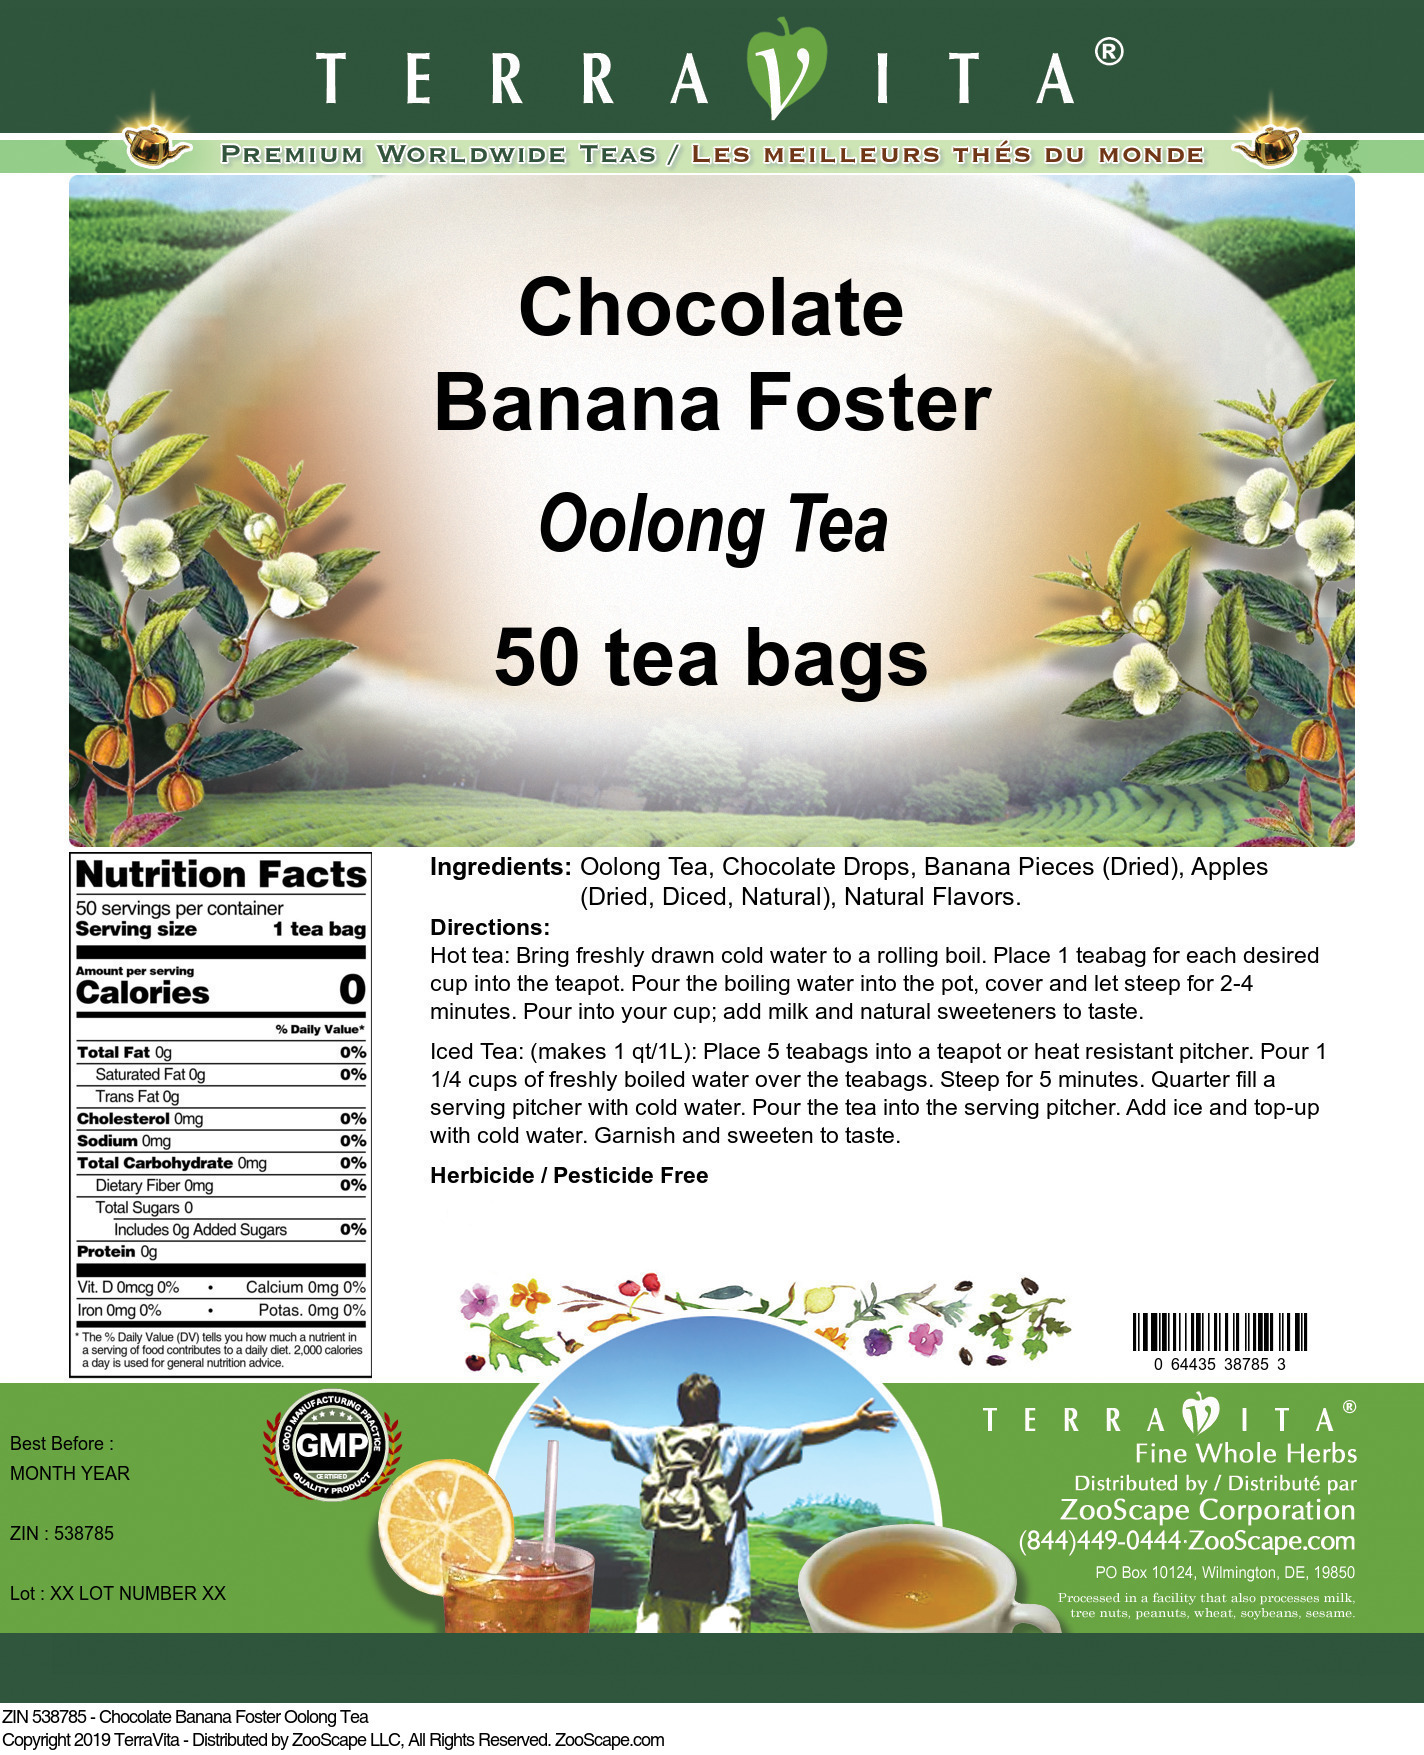 Chocolate Banana Foster Oolong Tea - Label